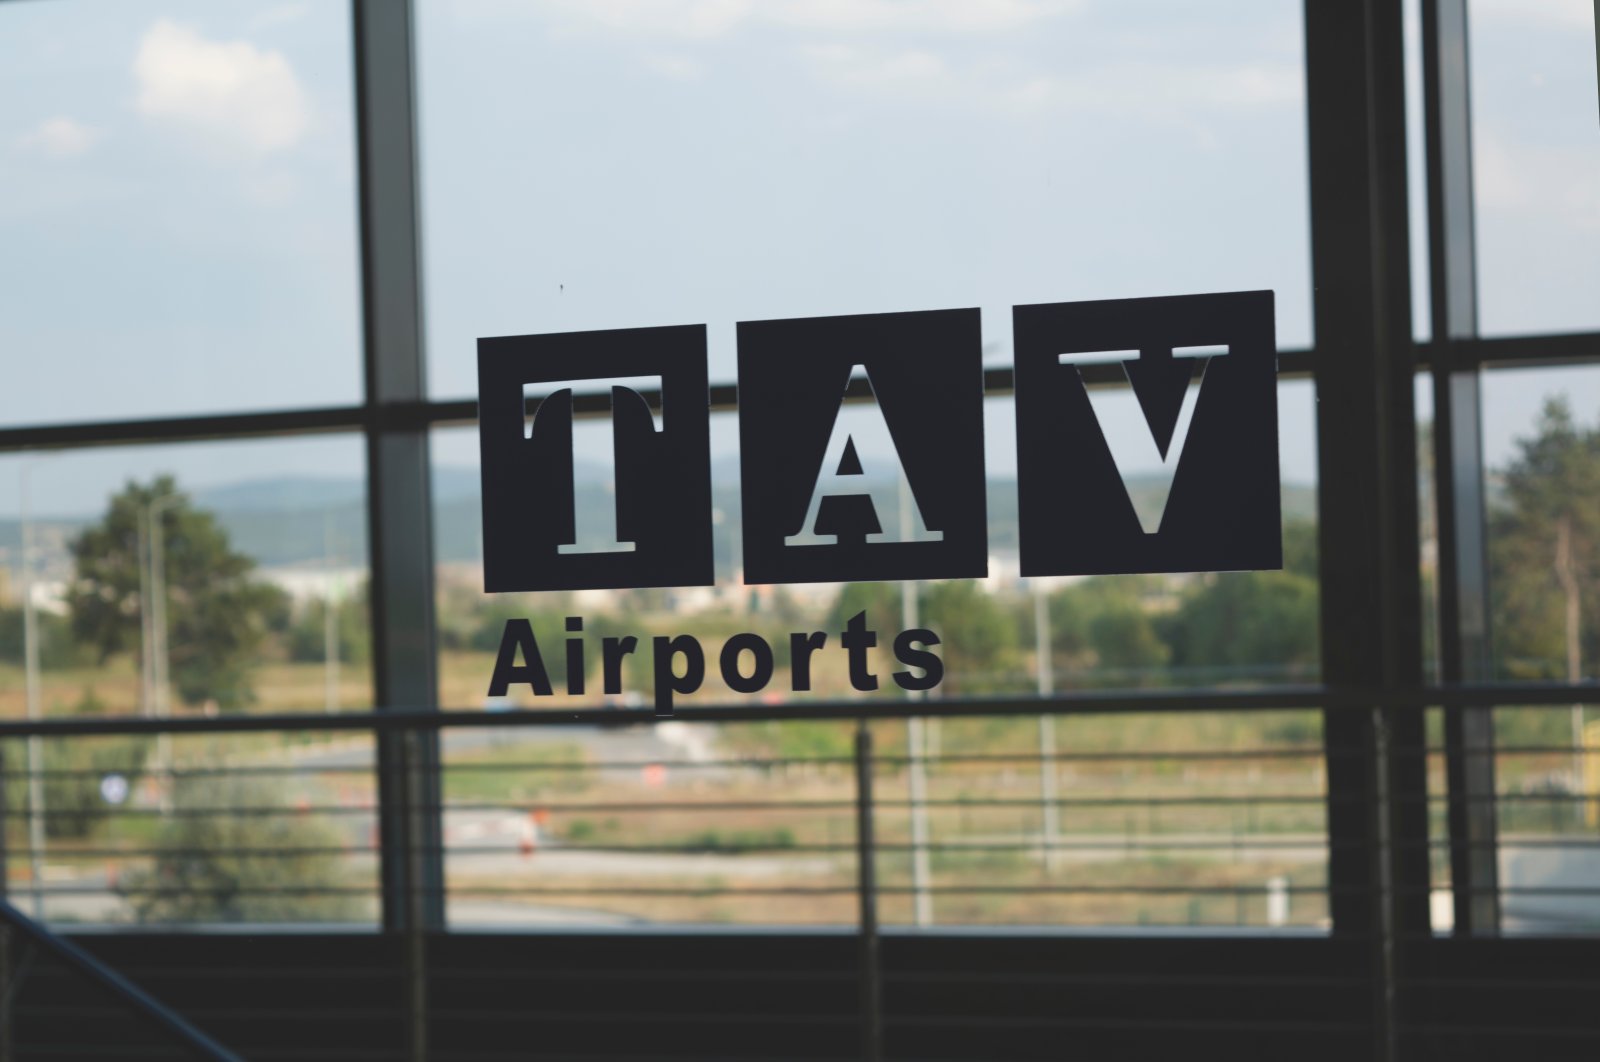 TAV Airports logo on an airport window in Skopje, Macedonia, Aug. 10, 2019. (Shutterstock Photo)